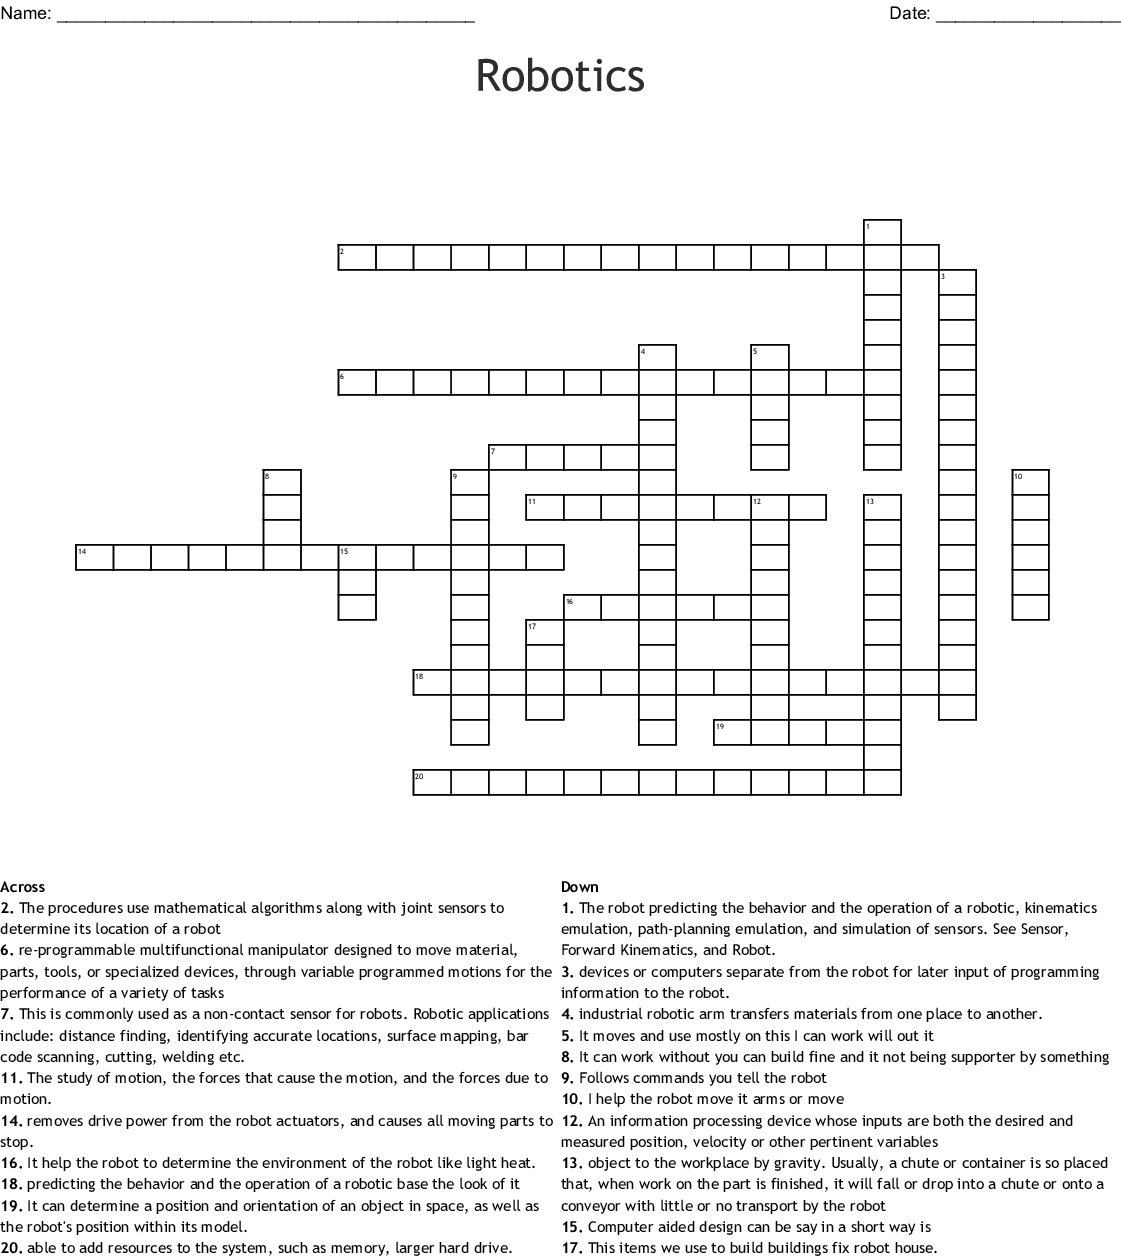 Robotics Crossword - Wordmint - Free Printable Crossword Puzzles Robotics